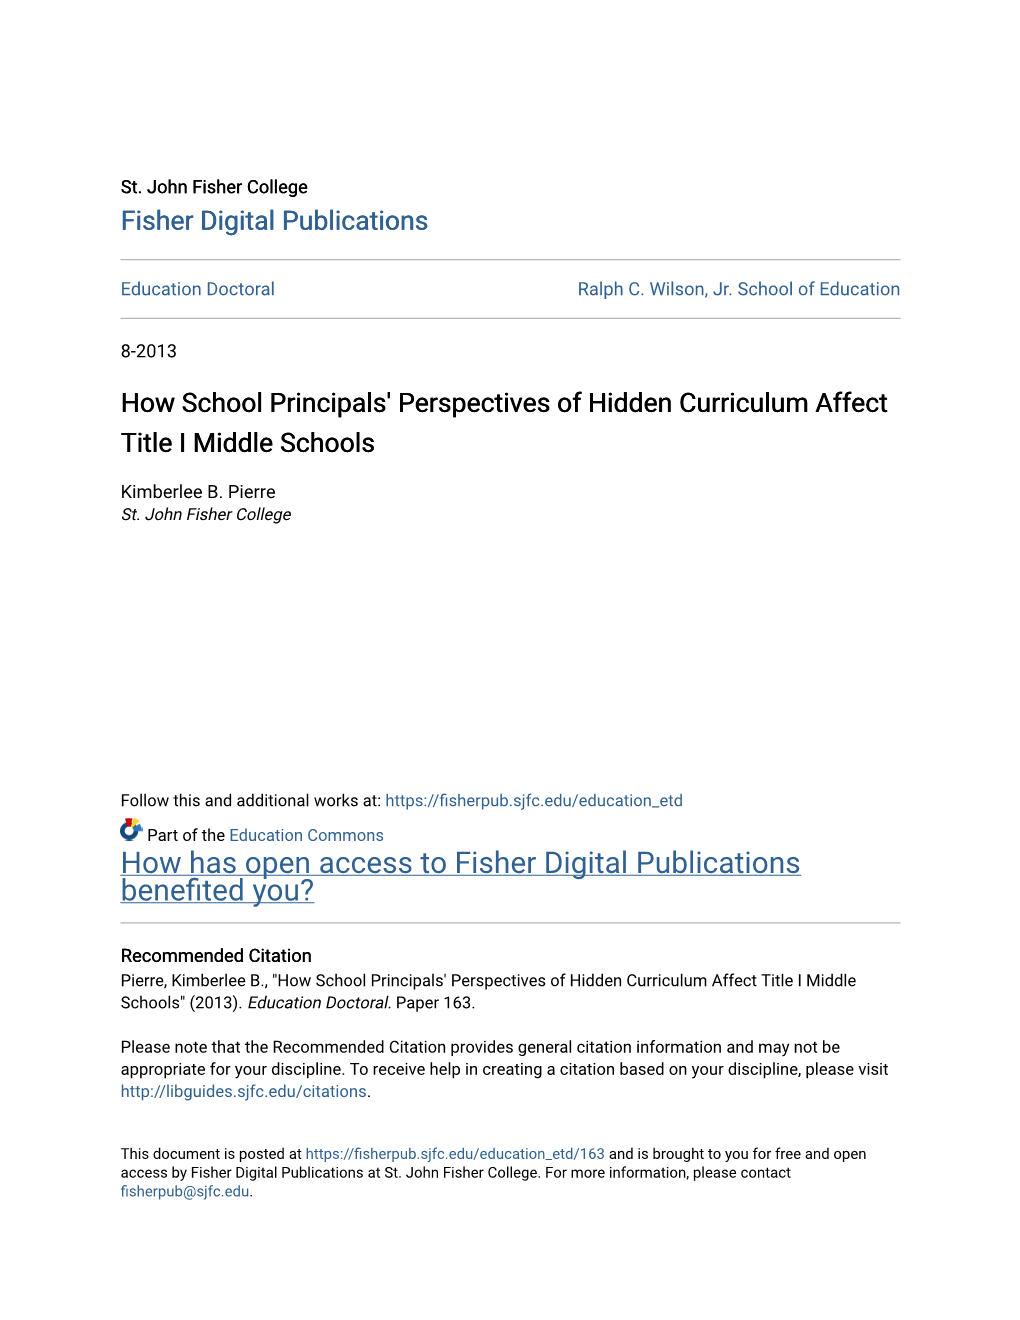 How School Principals' Perspectives of Hidden Curriculum Affect Title I Middle Schools